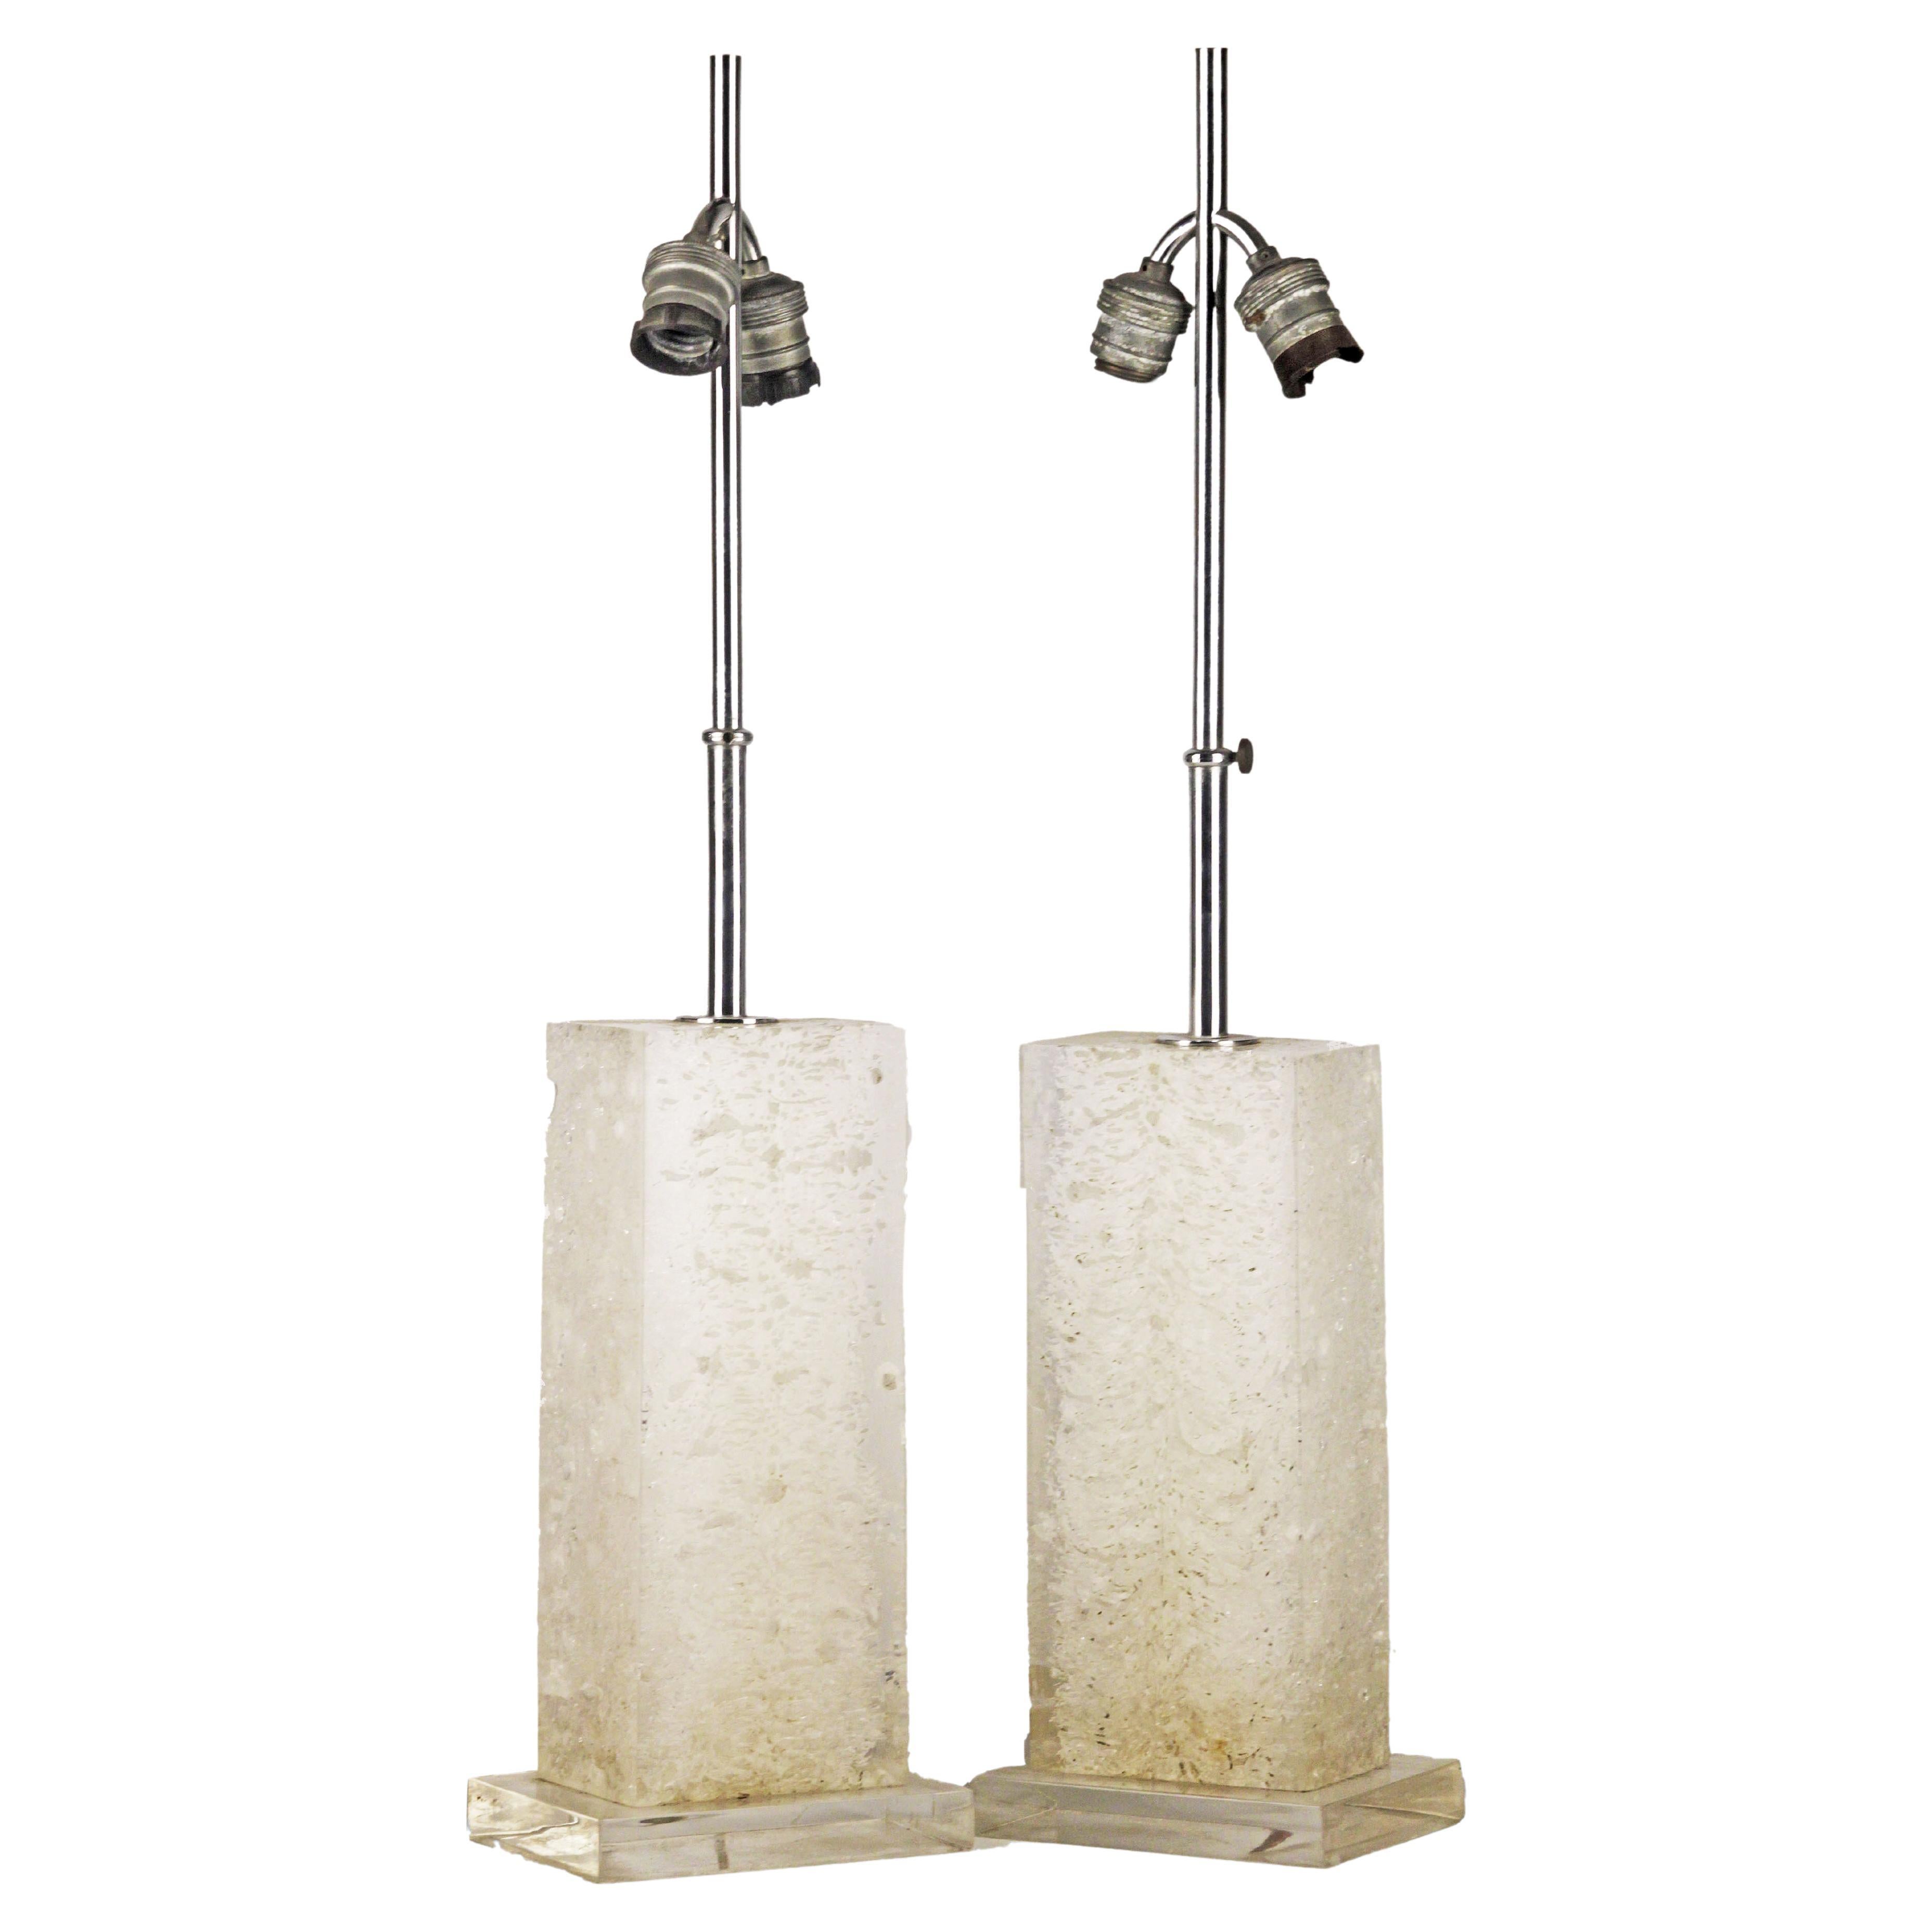 Pair of Danish Design Lamps with Translucent/Textured Acrylic Rectangular Bases